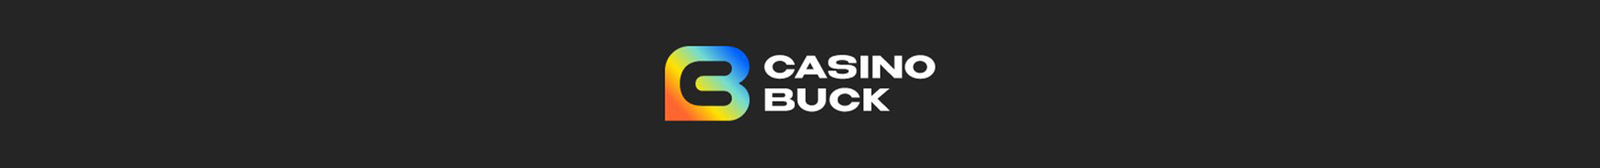 Casino Buck recension